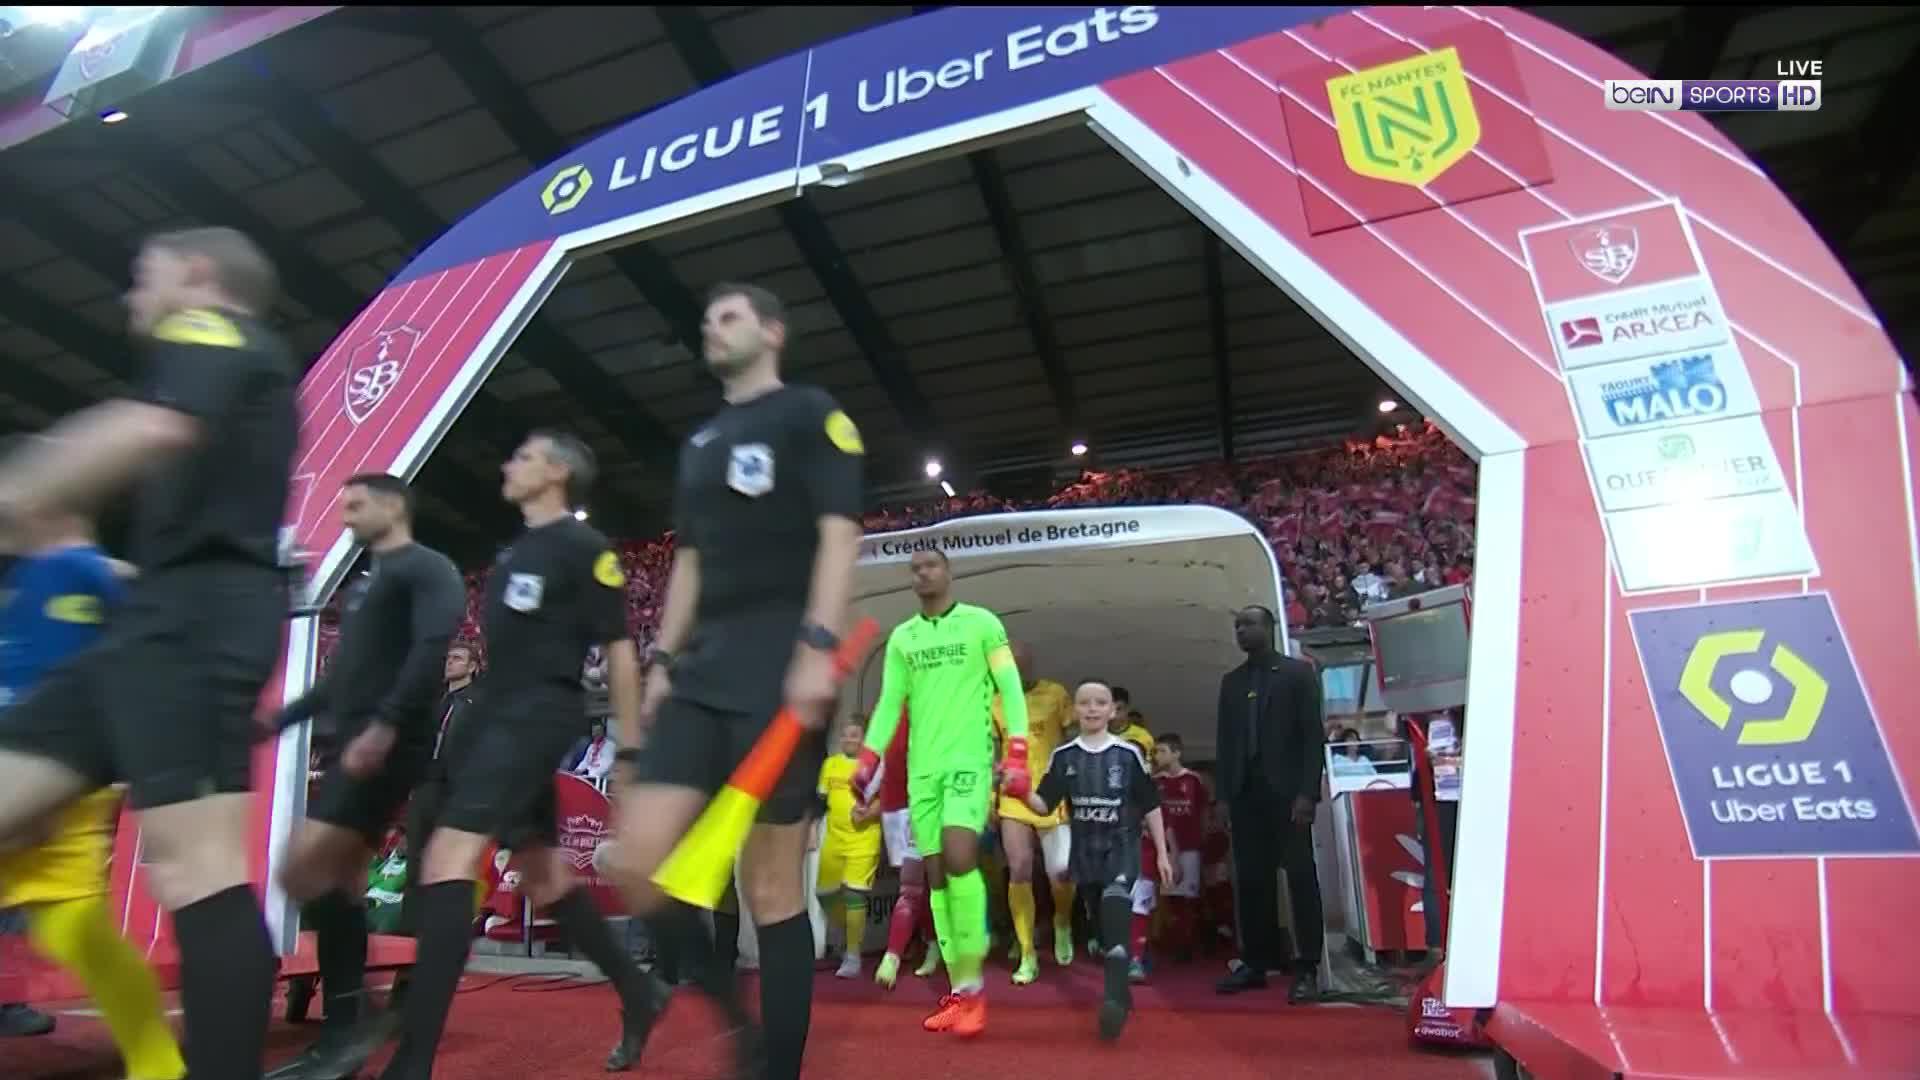 HL Ligue 1 - Brest vs Nantes